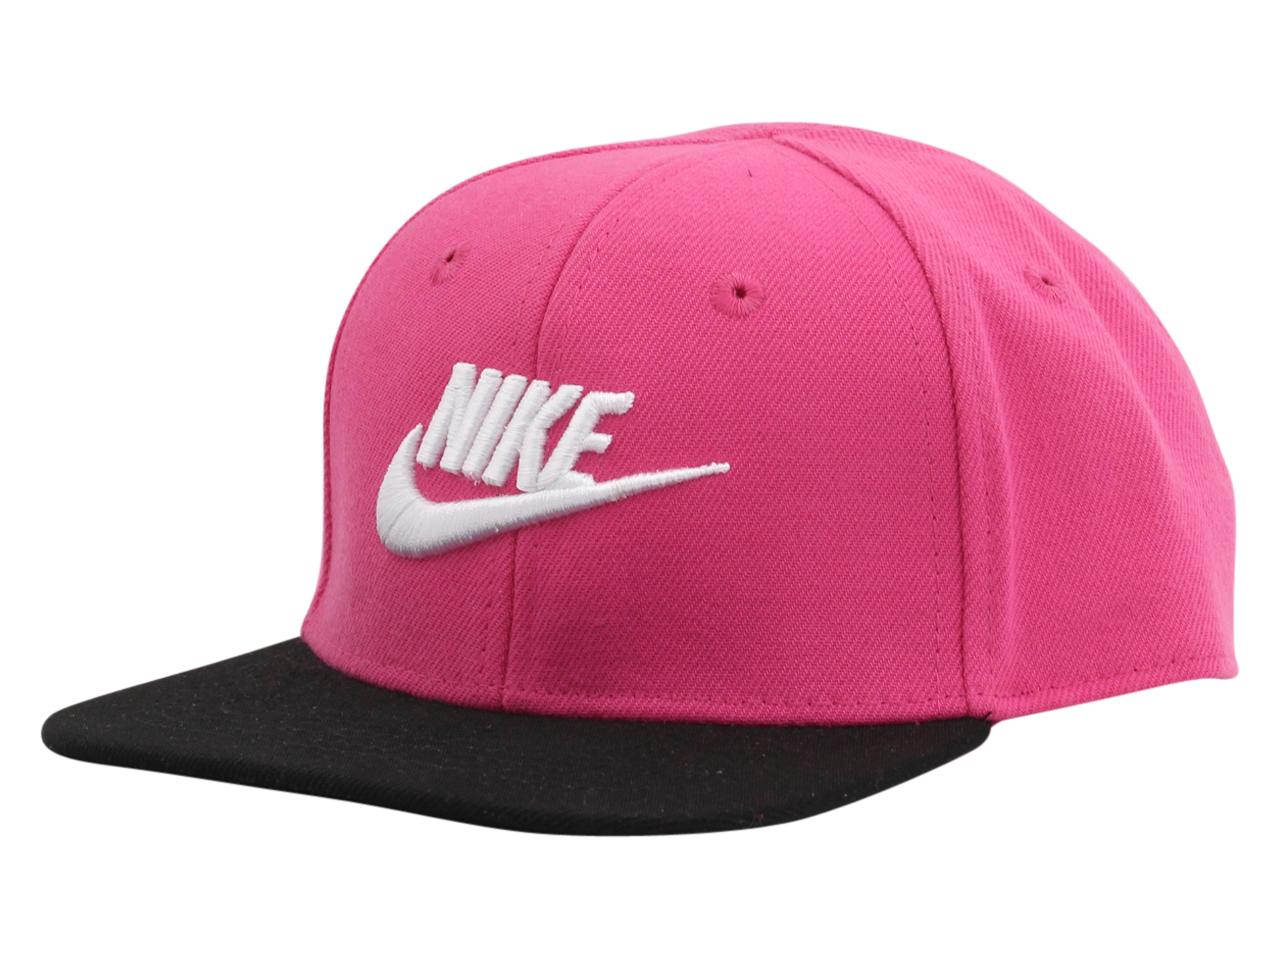 Nike Infant/Toddler Girl's Snapback Baseball Cap Hat - Vivid Pink/Black - 12 24 Months